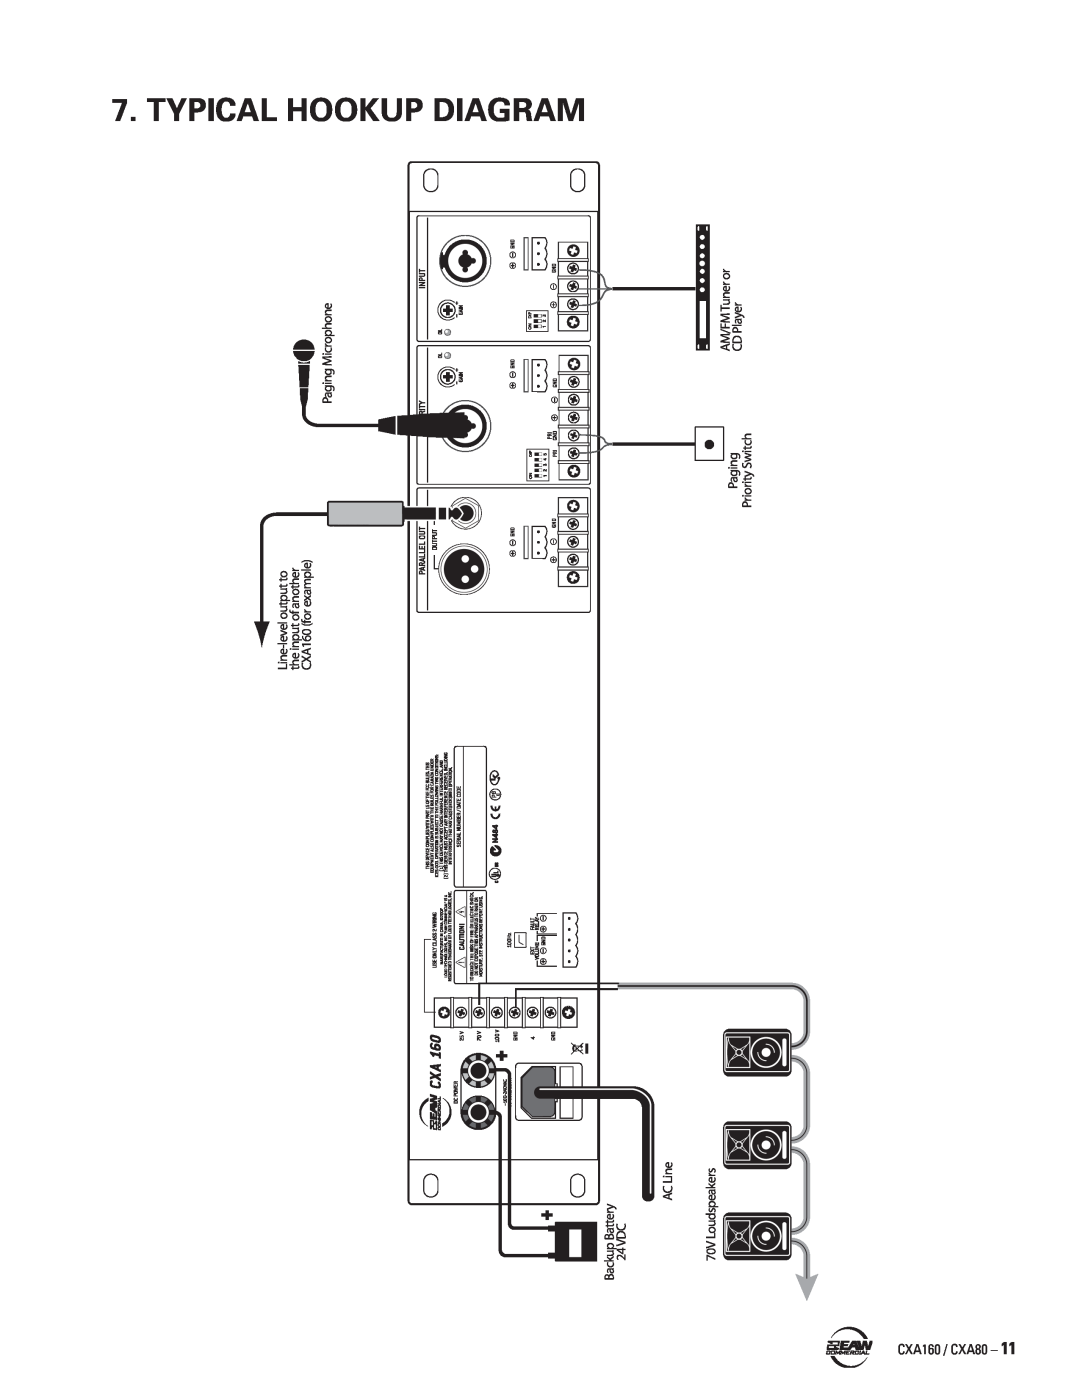 EAW CXA160 / CXA80 instruction manual Typical Hookup Diagram, Backup Battery 24VDC AC Line 70V Loudspeakers 